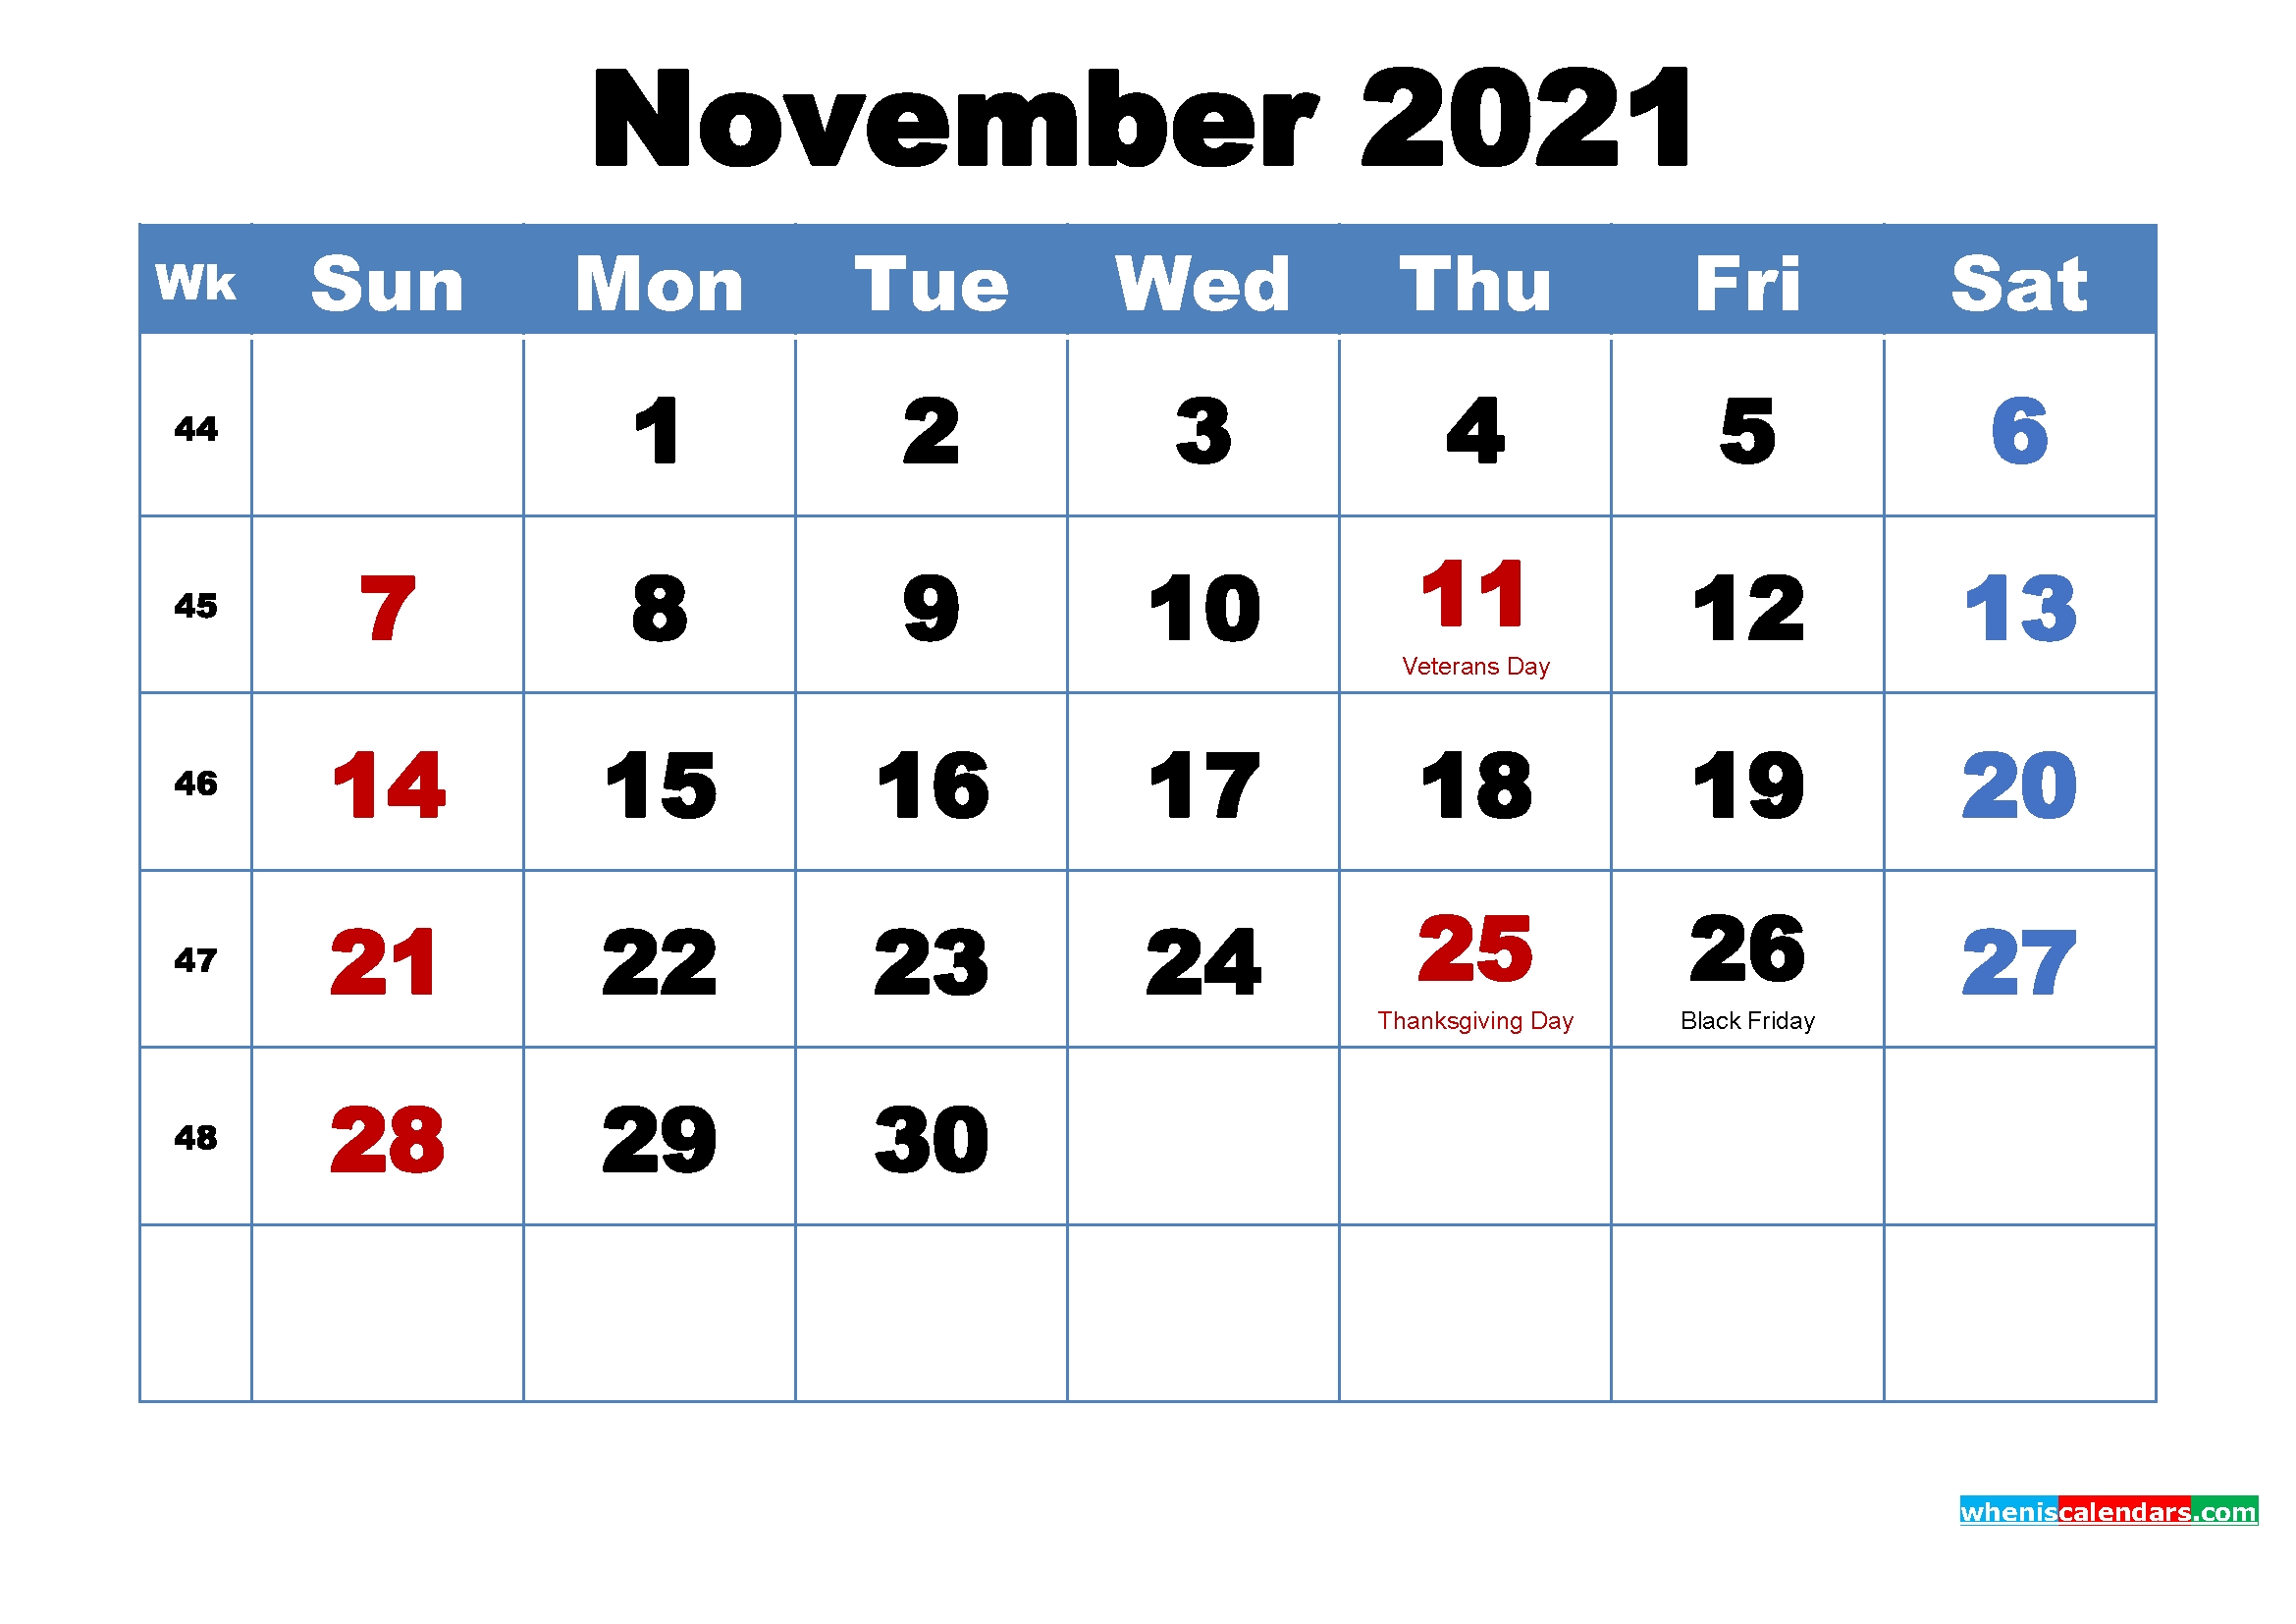 2021 Thanksgiving Calendar | Lunar Calendar Moon Calendar November 2021